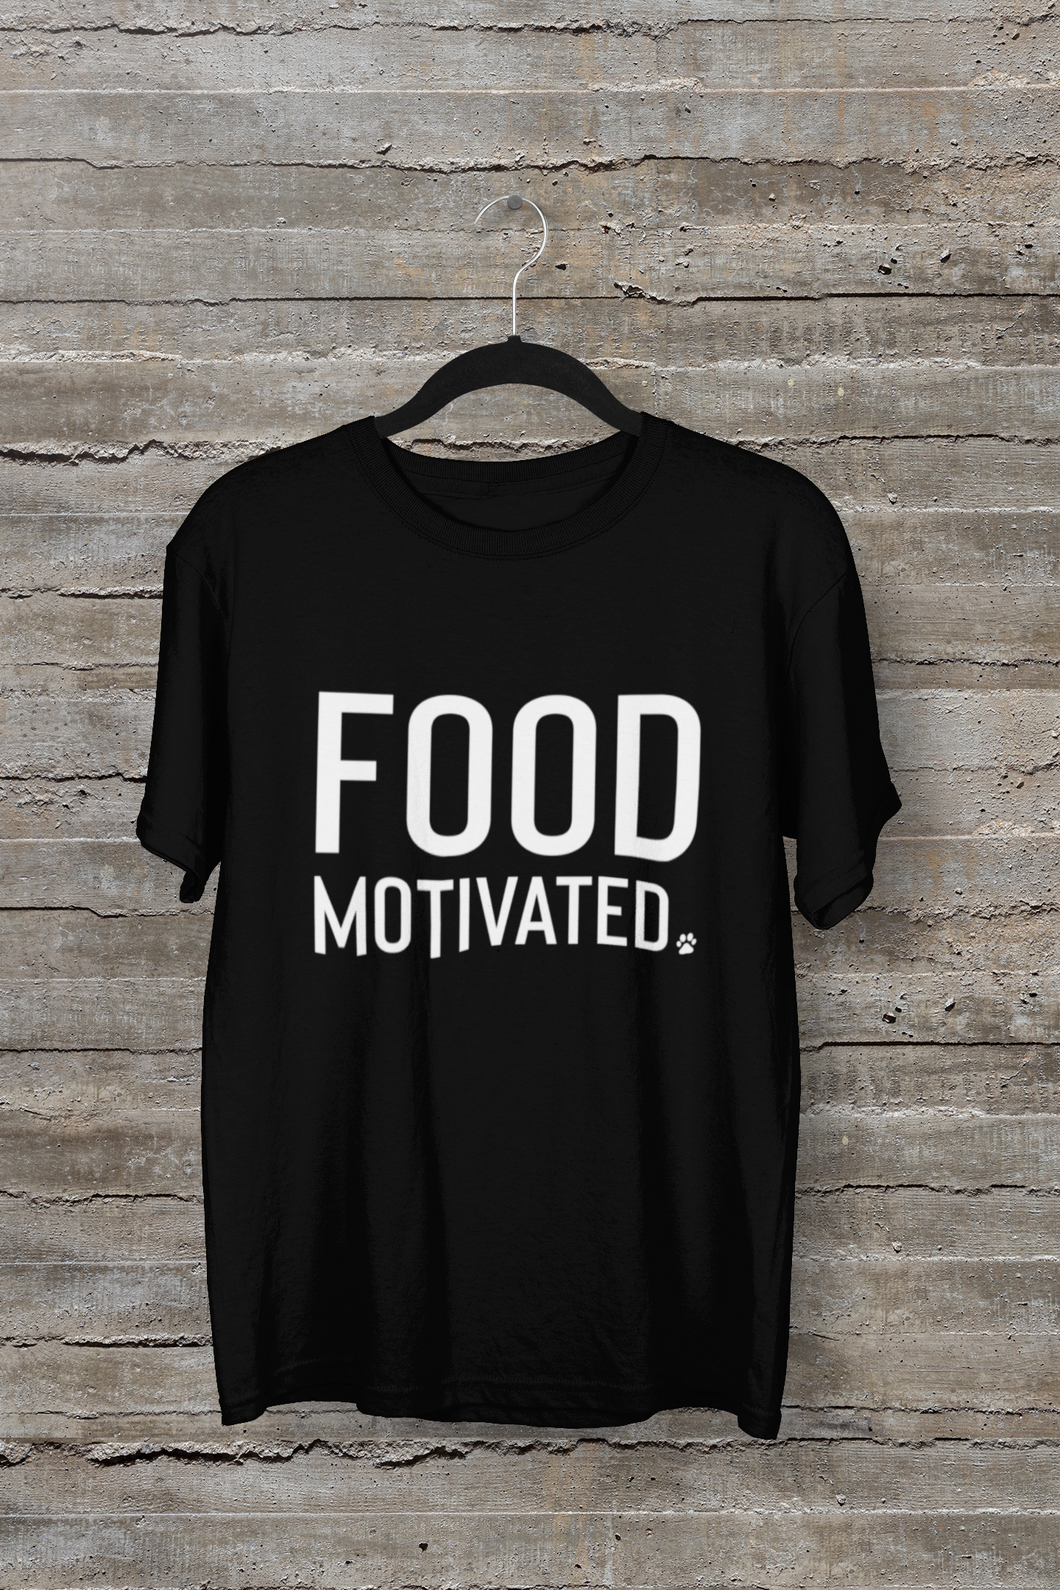 Food Motivated Men's/Unisex or Women's T-shirt